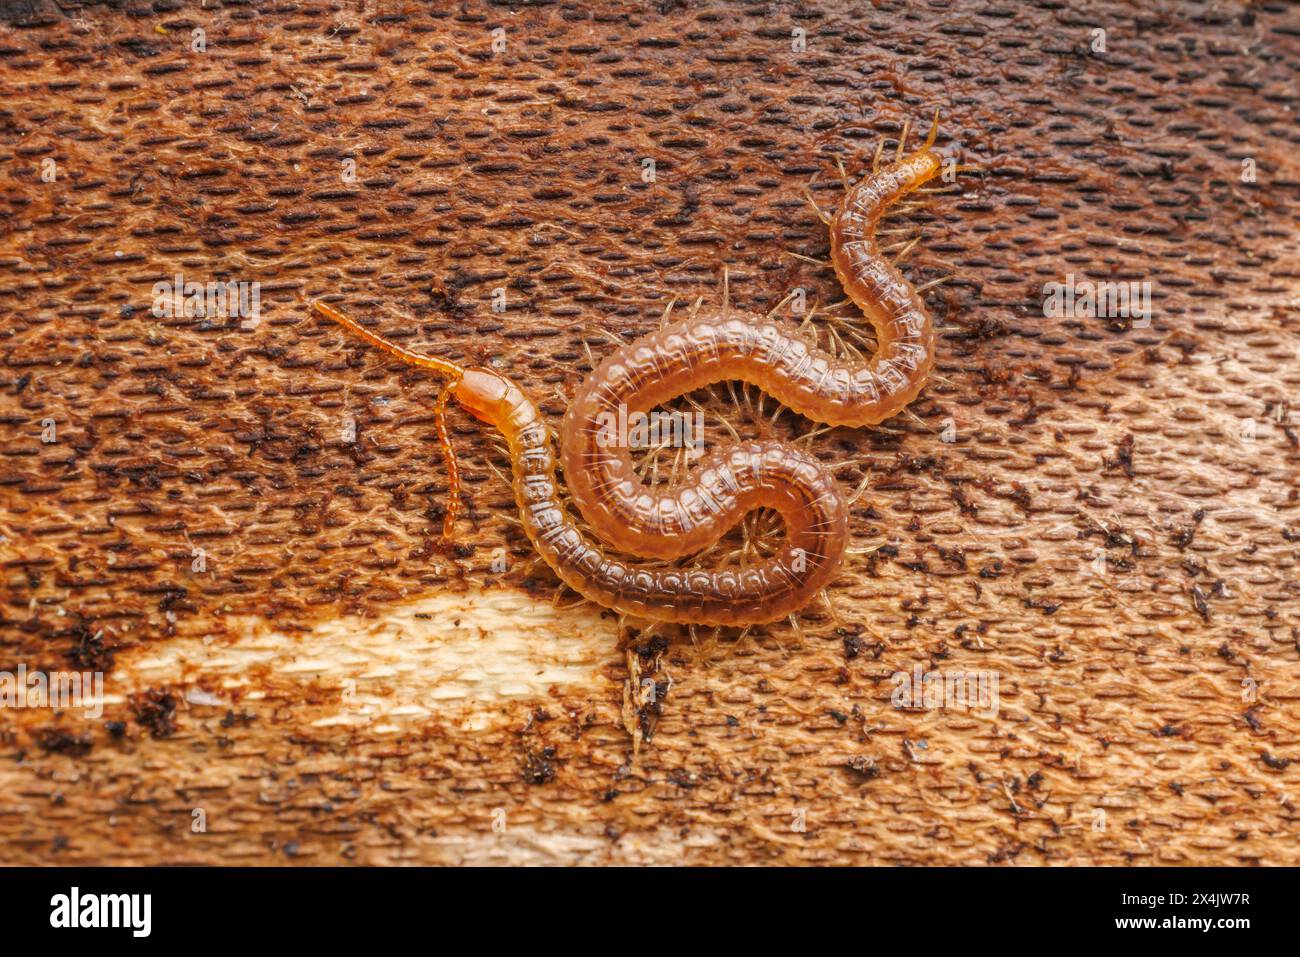 Diamondback Soil Centipede (Geophilus vittatus) Stock Photo